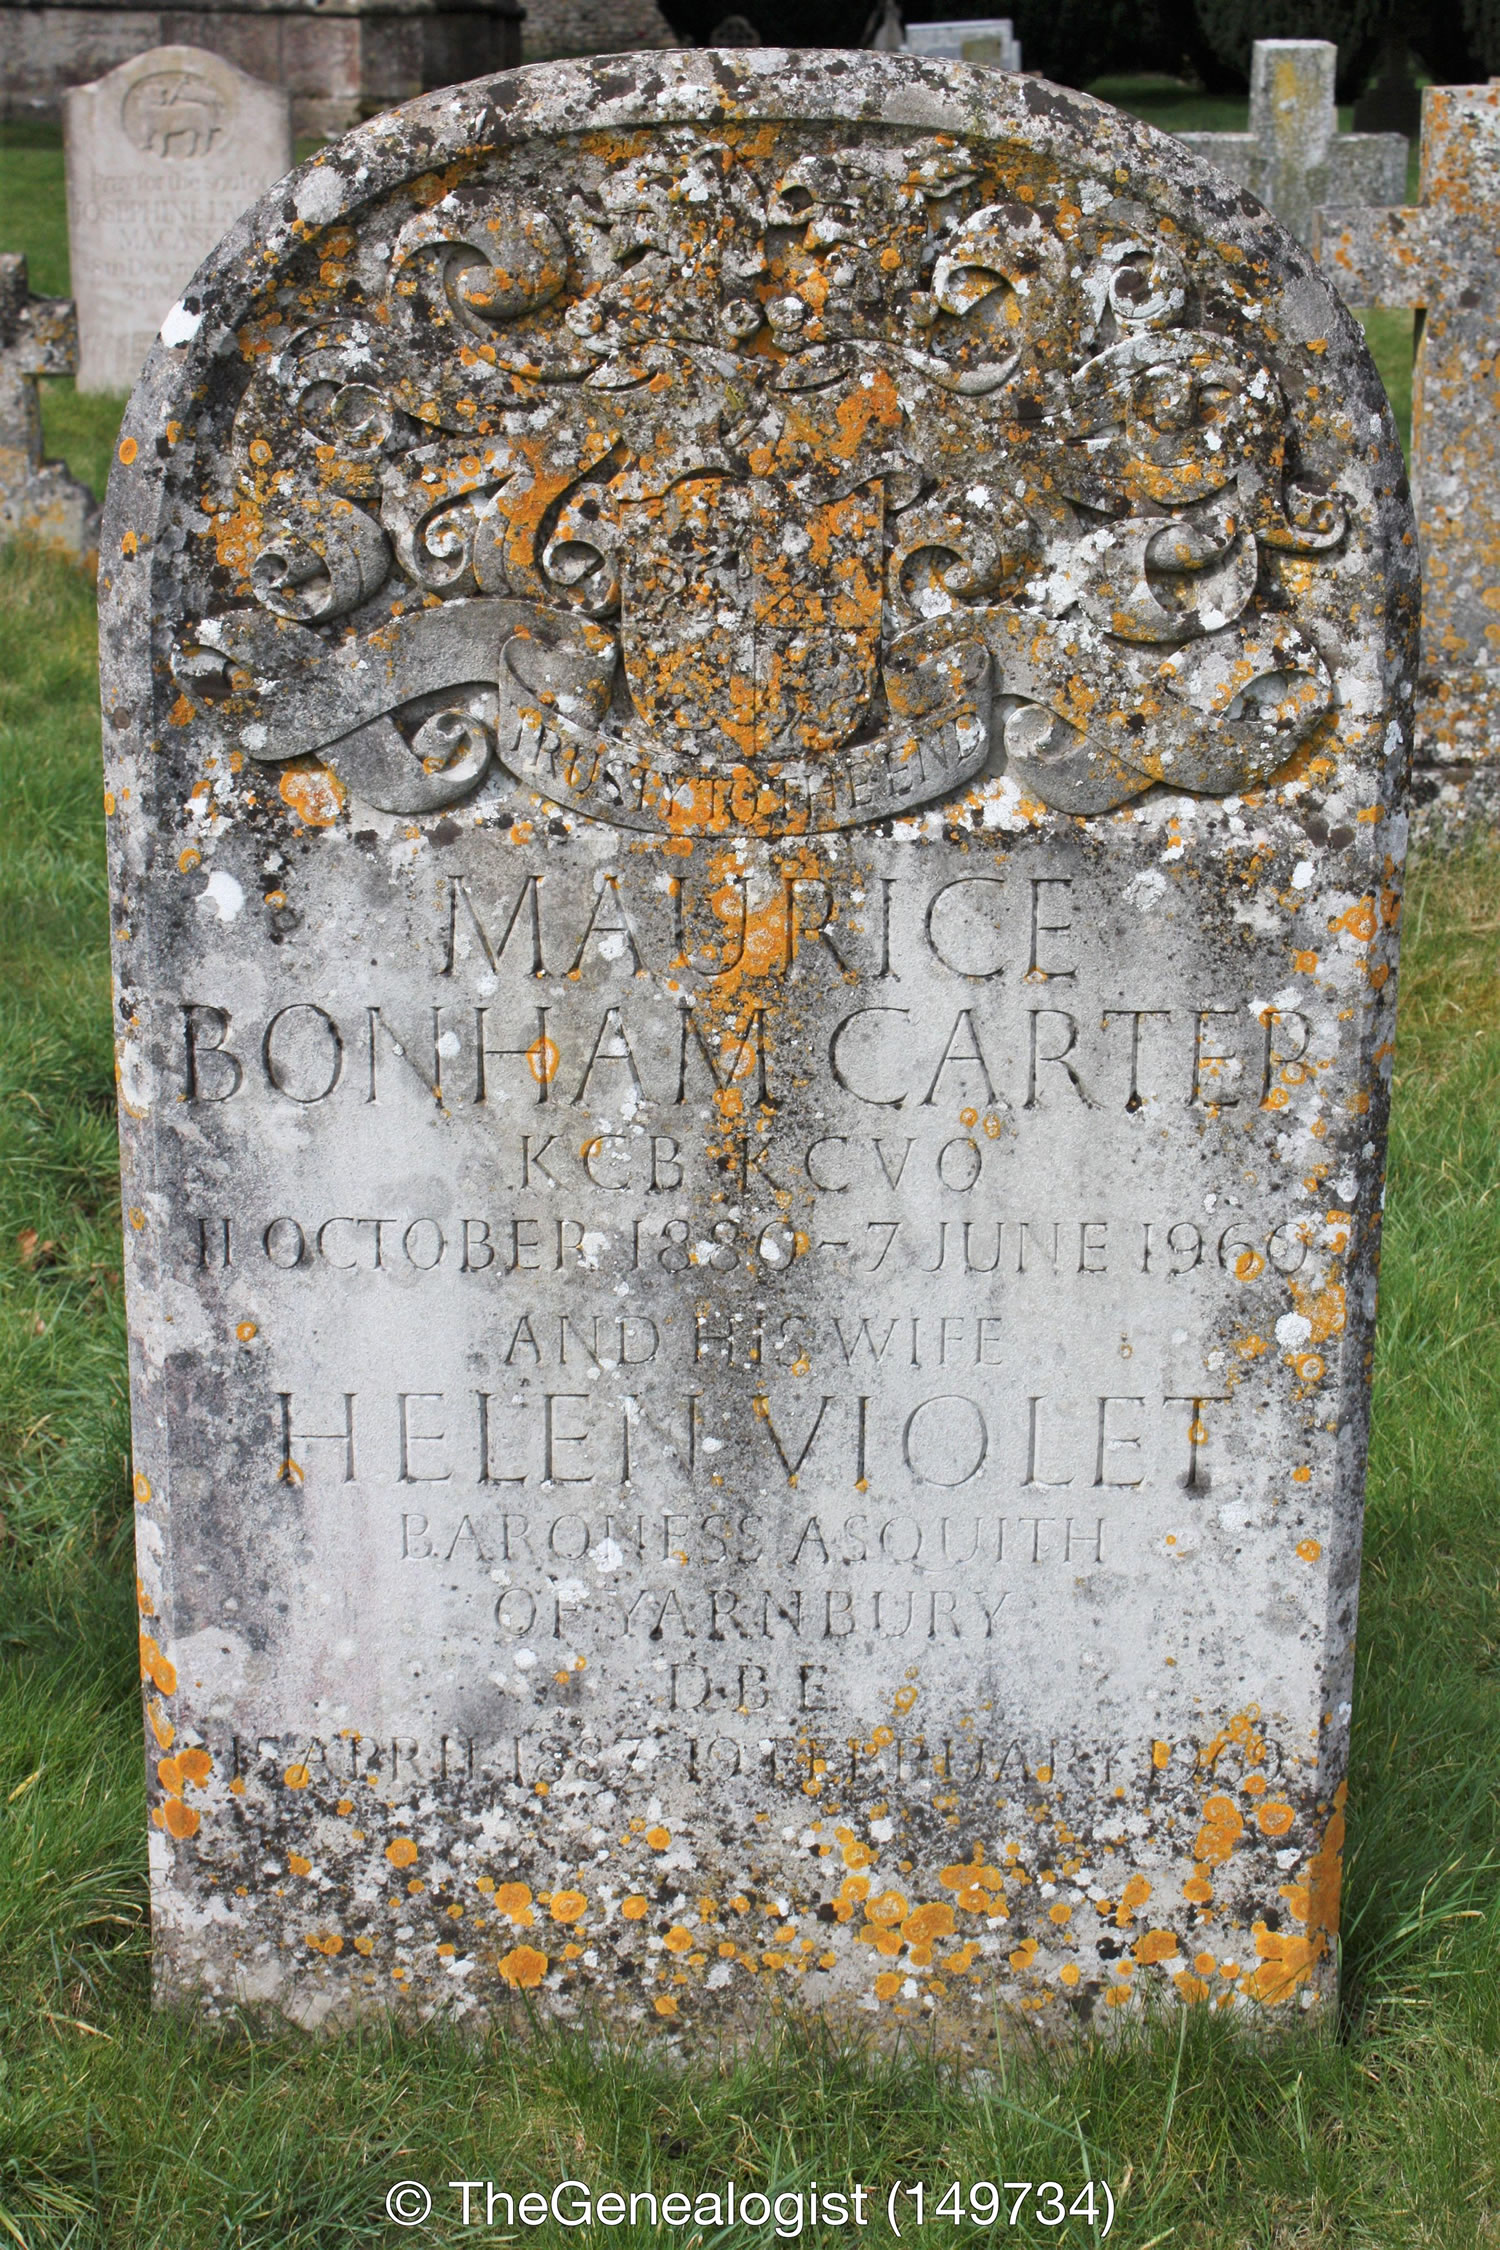 Headstone for Sir Maurice and Baroness Asquith of Yarnbury, grandparents of Helena Bonham Carter